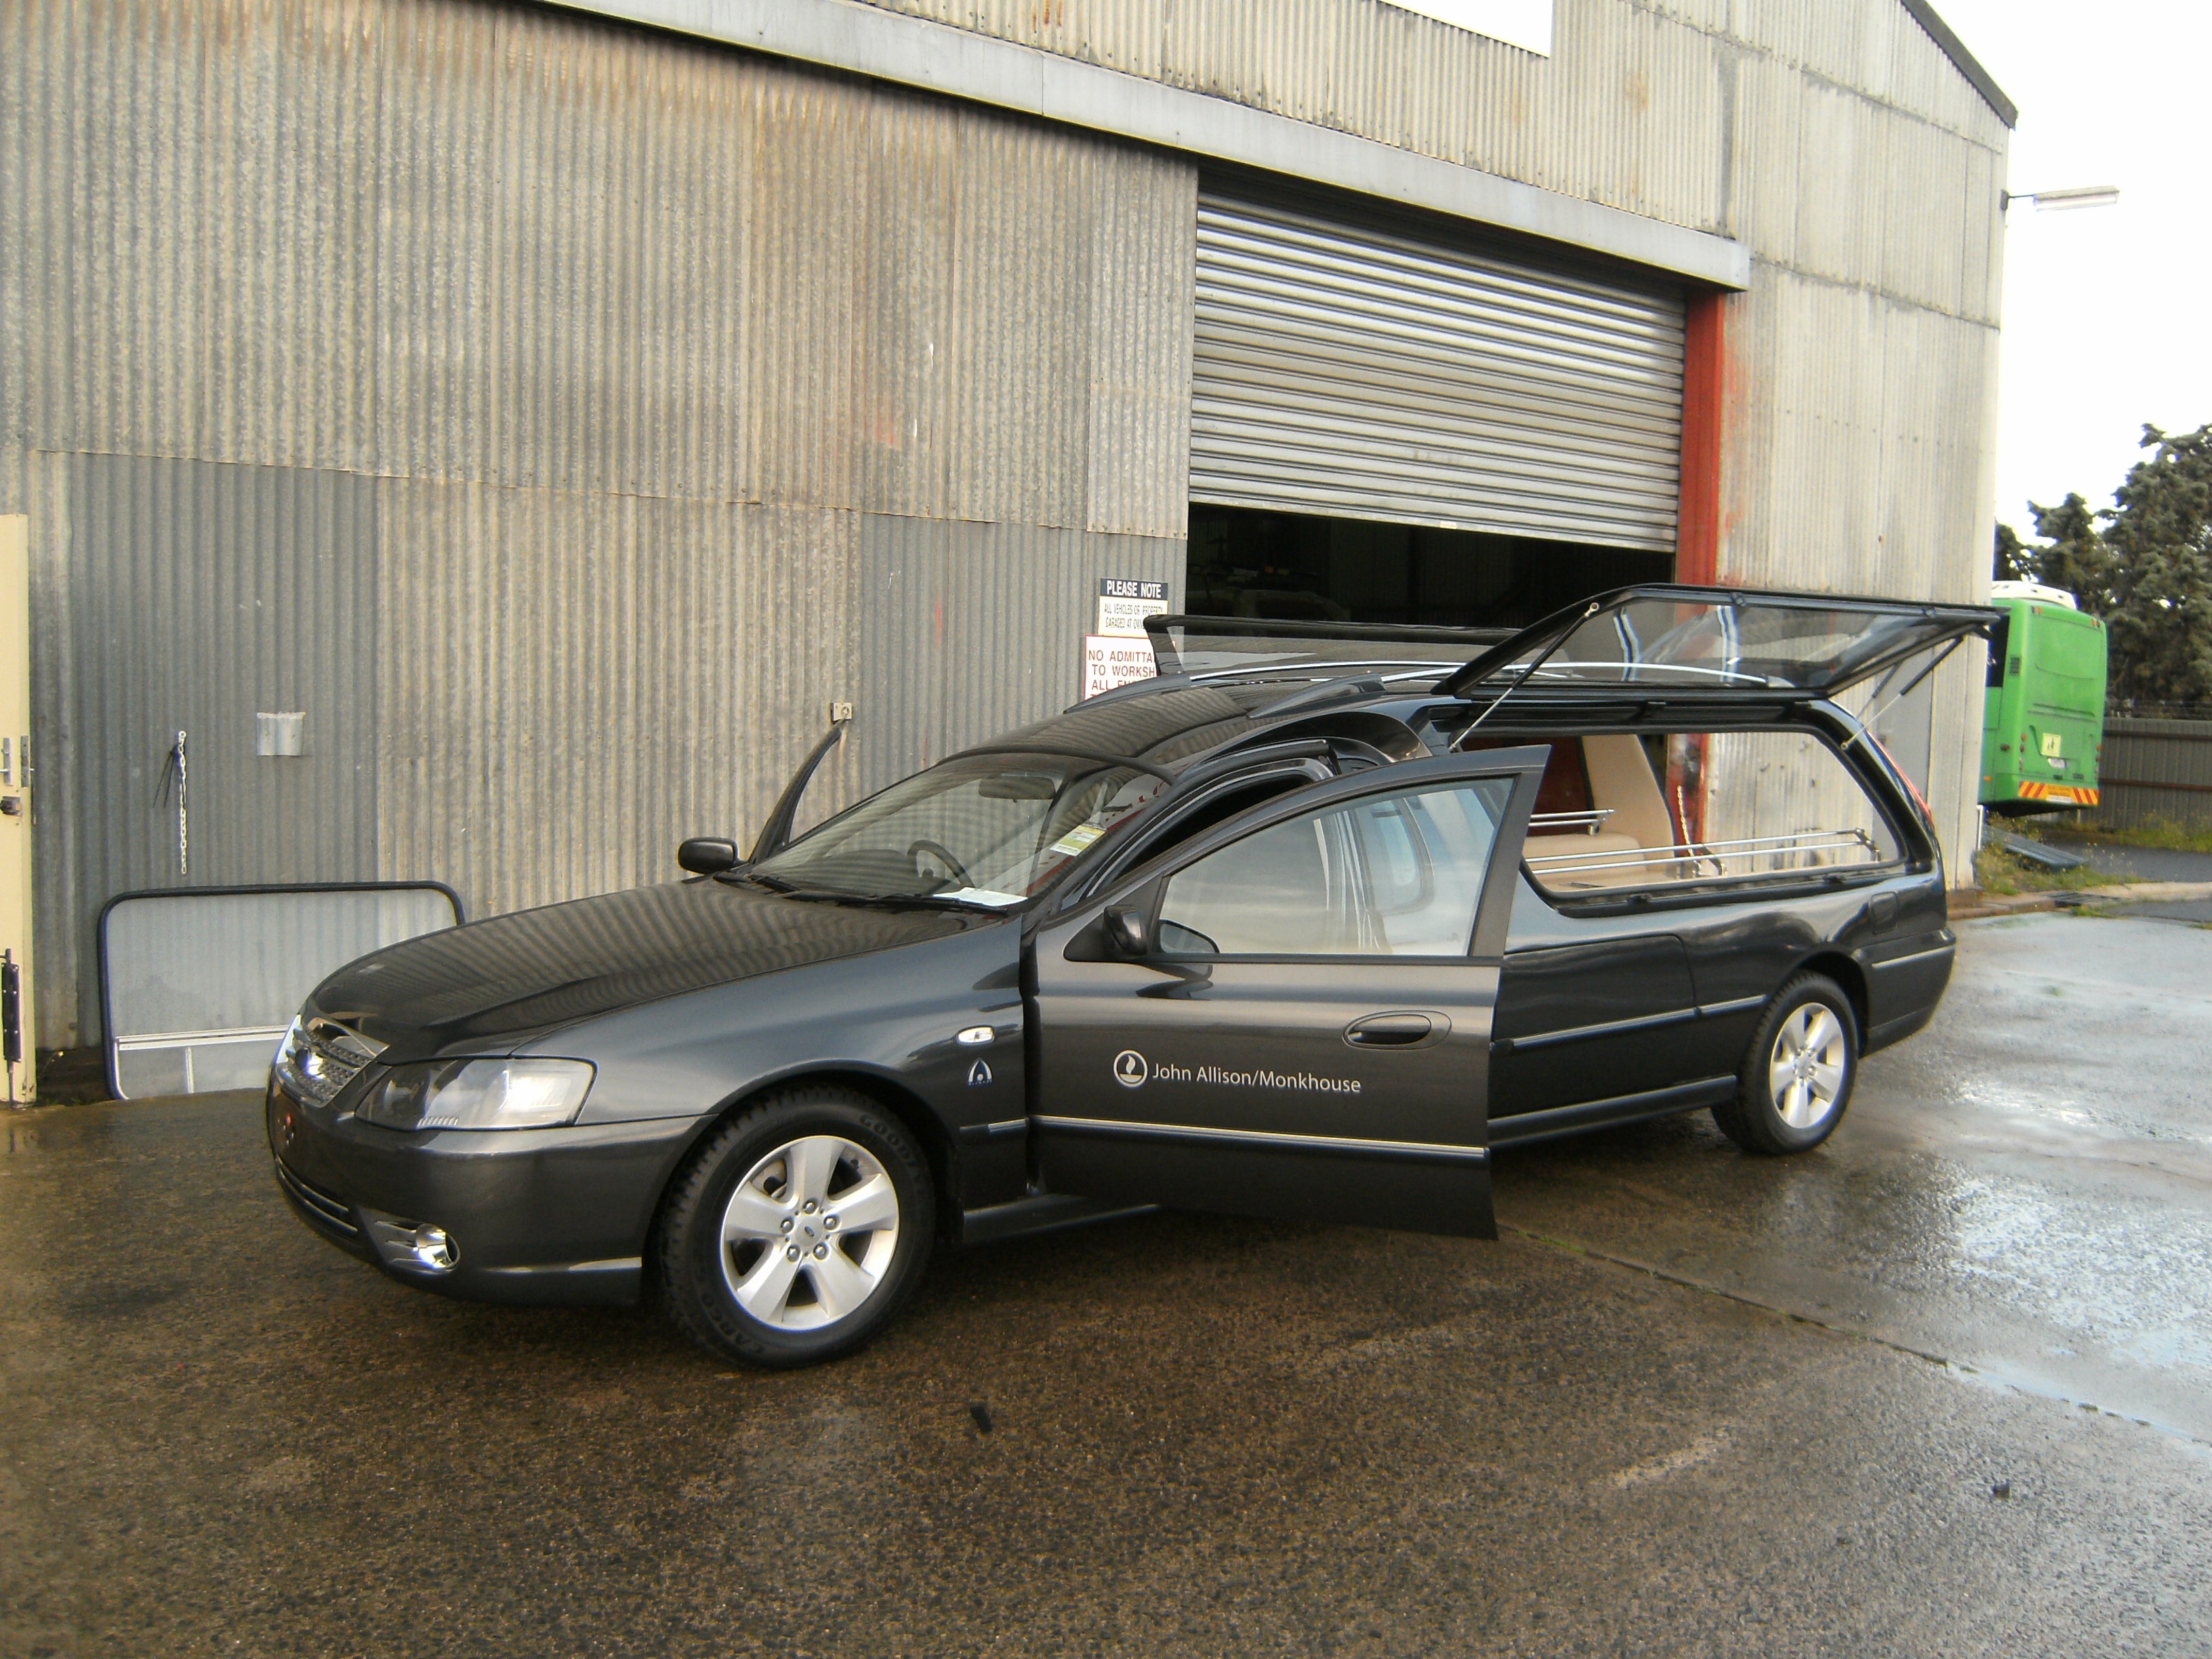 Funeral car modification